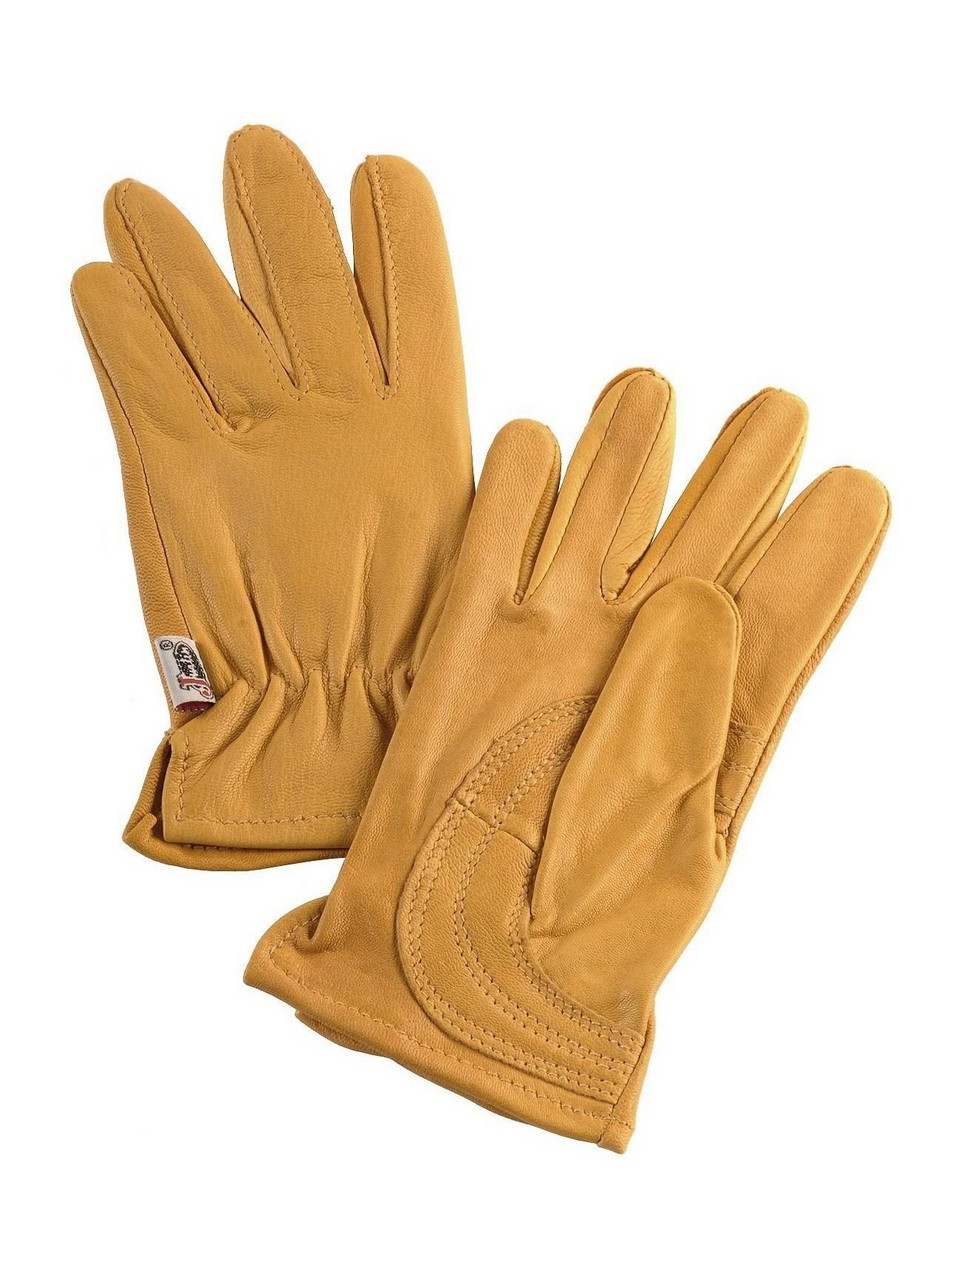 Superior Glove Leather Gloves,Tan,Glove Size L,PR 378CXGOB-L